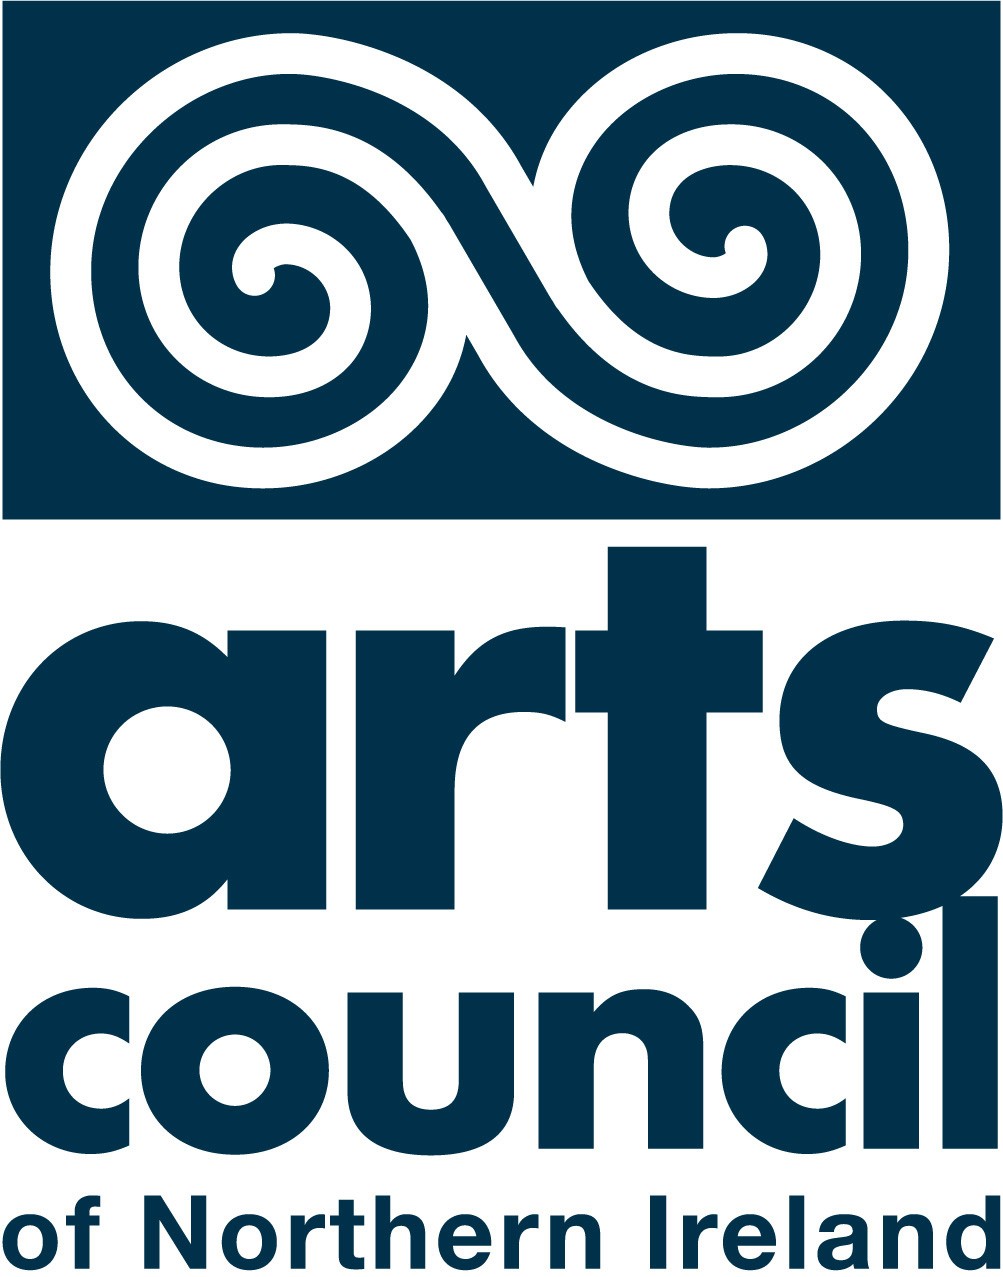 Arts Council Northern Ireland